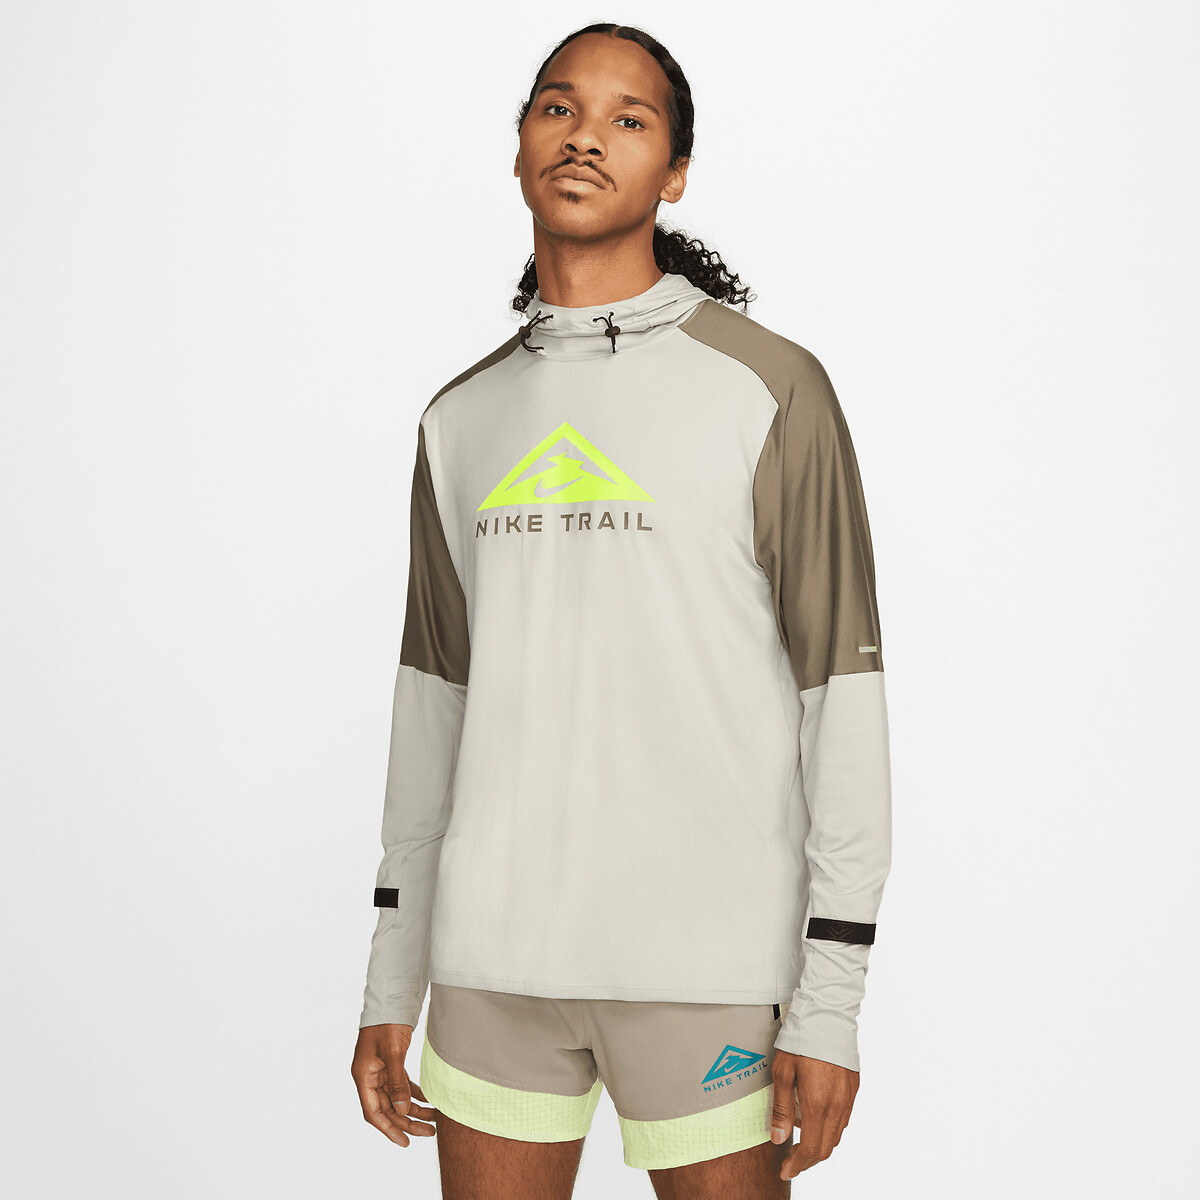 Trail-Shirt mit Kapuze von Nike